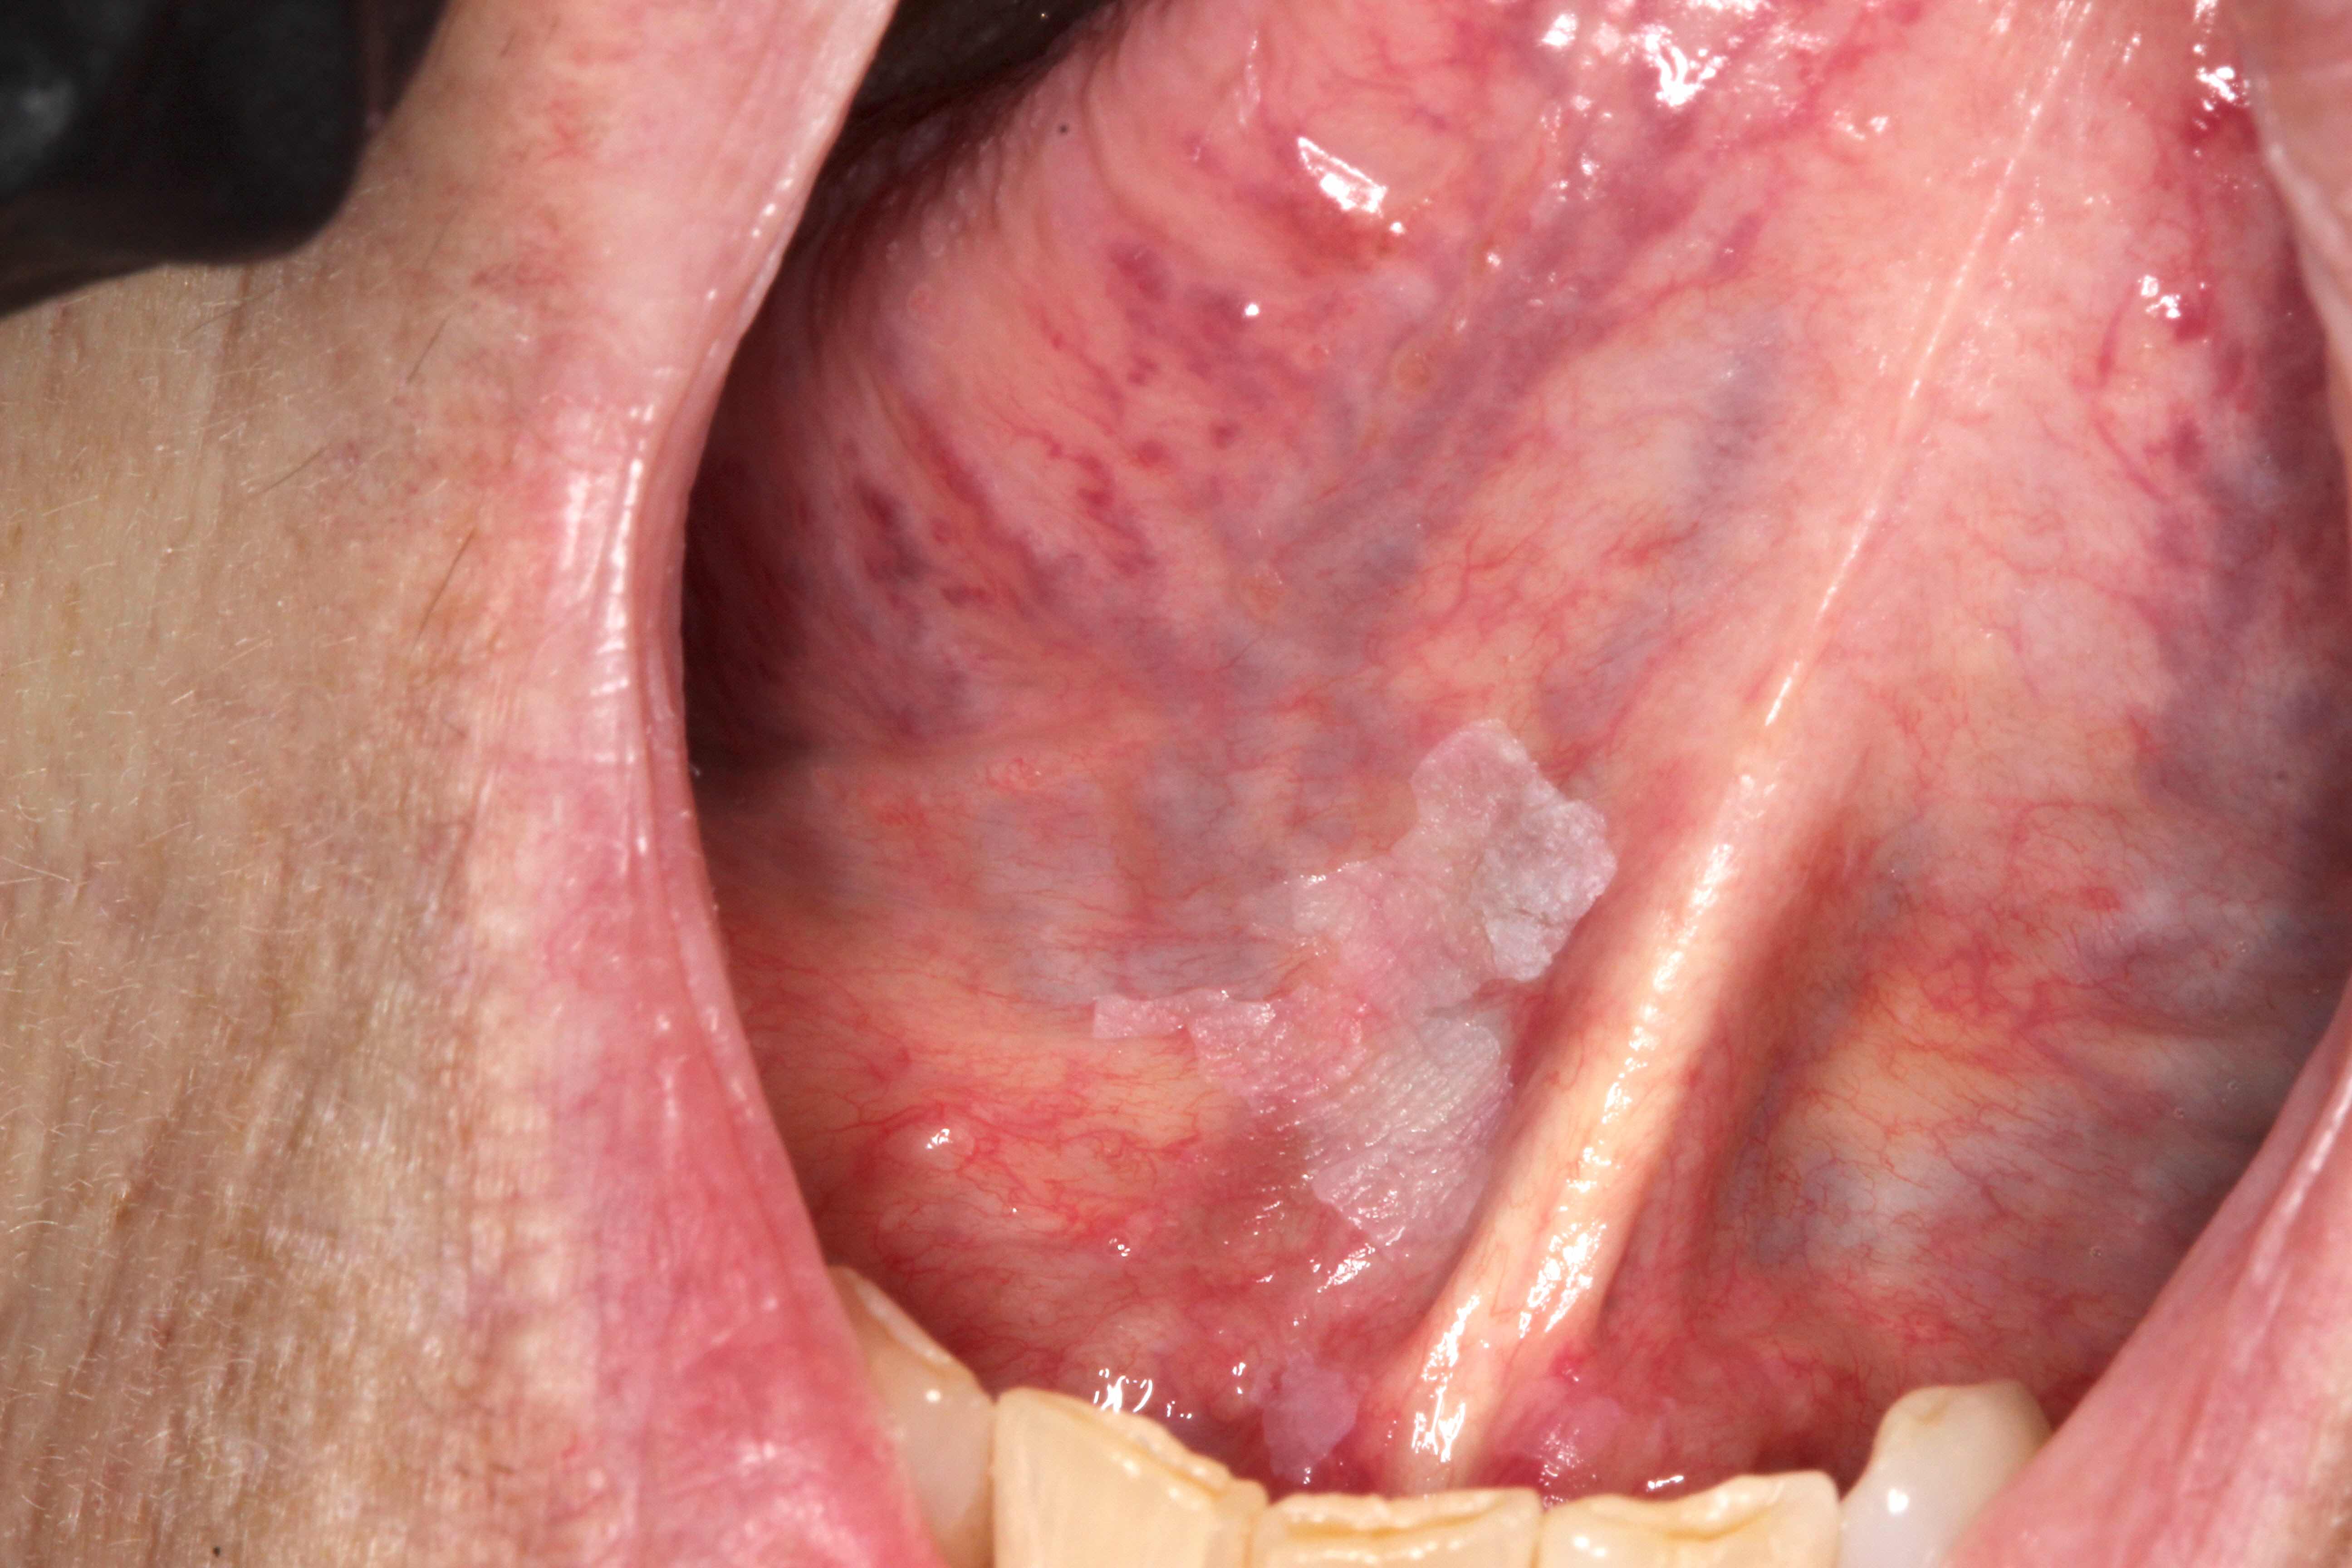 Leukoplakia on ventral tongue